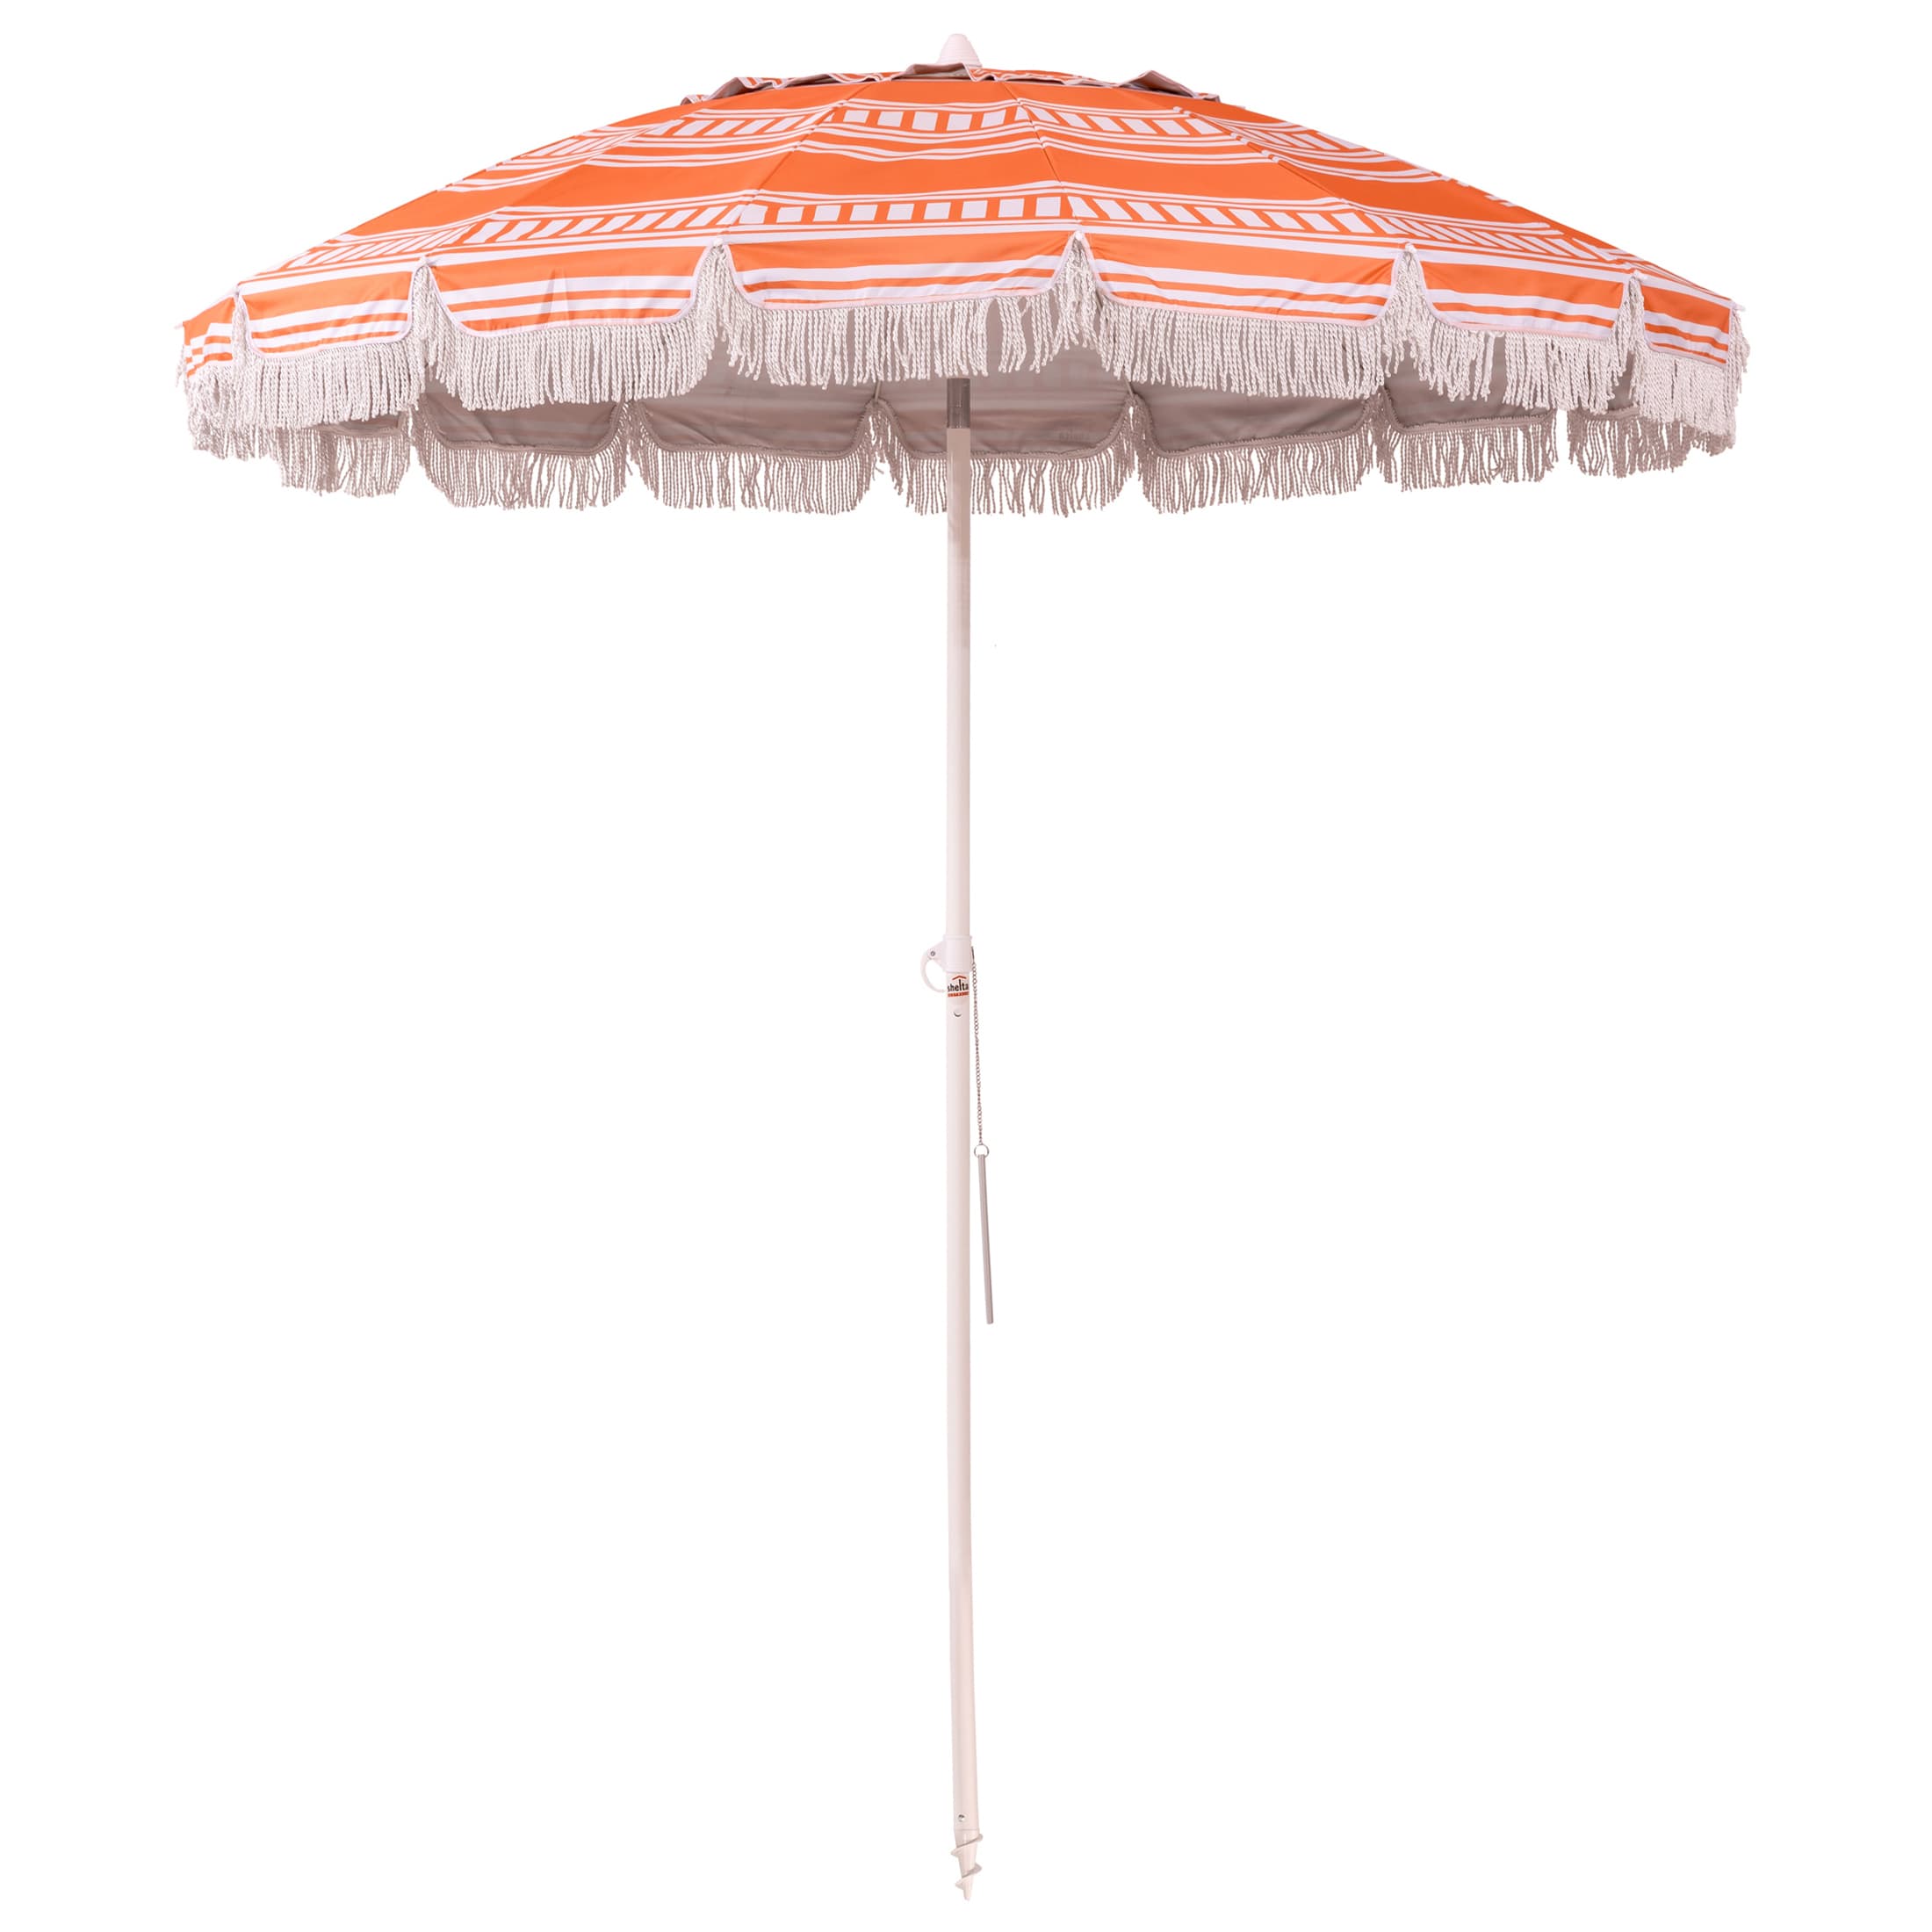 Shelta Bronte Beach Umbrella - 3 Colours